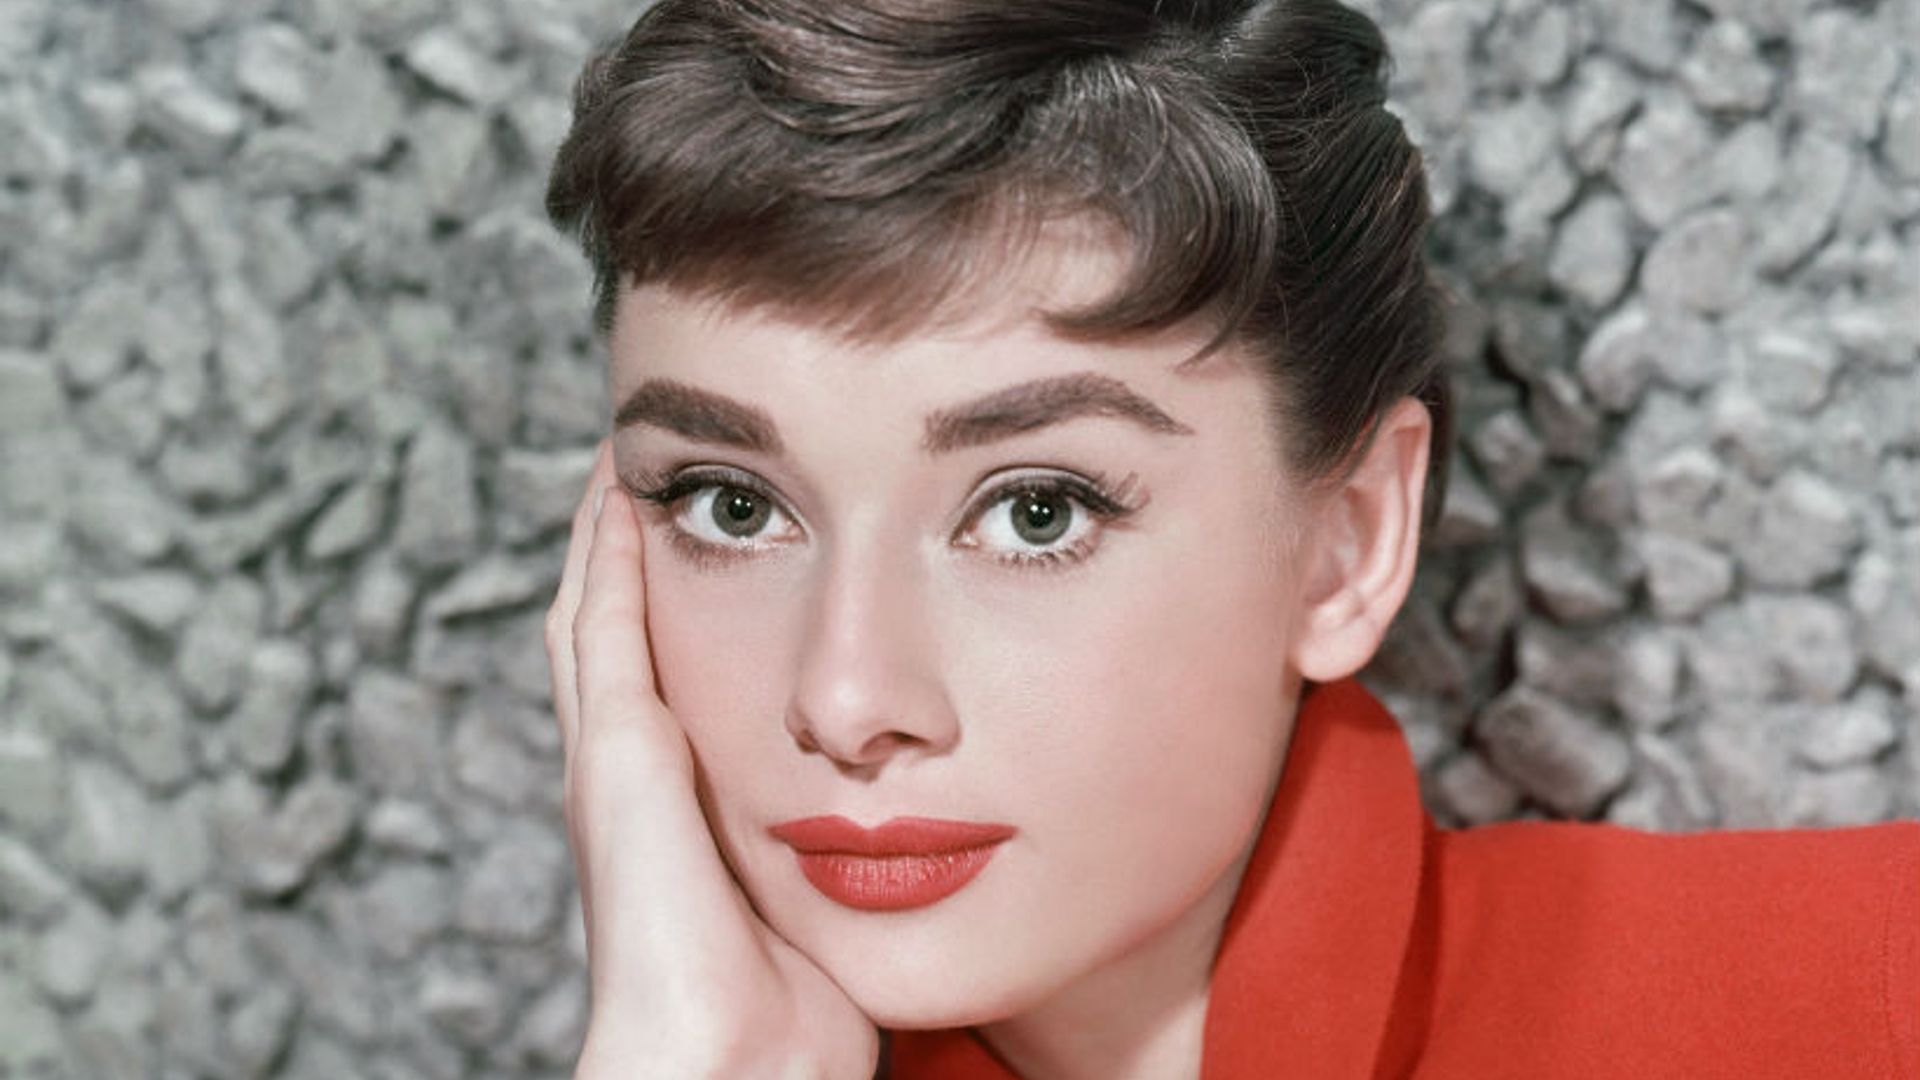 Audrey Hepburn's clothes and memorabilia go up for auction